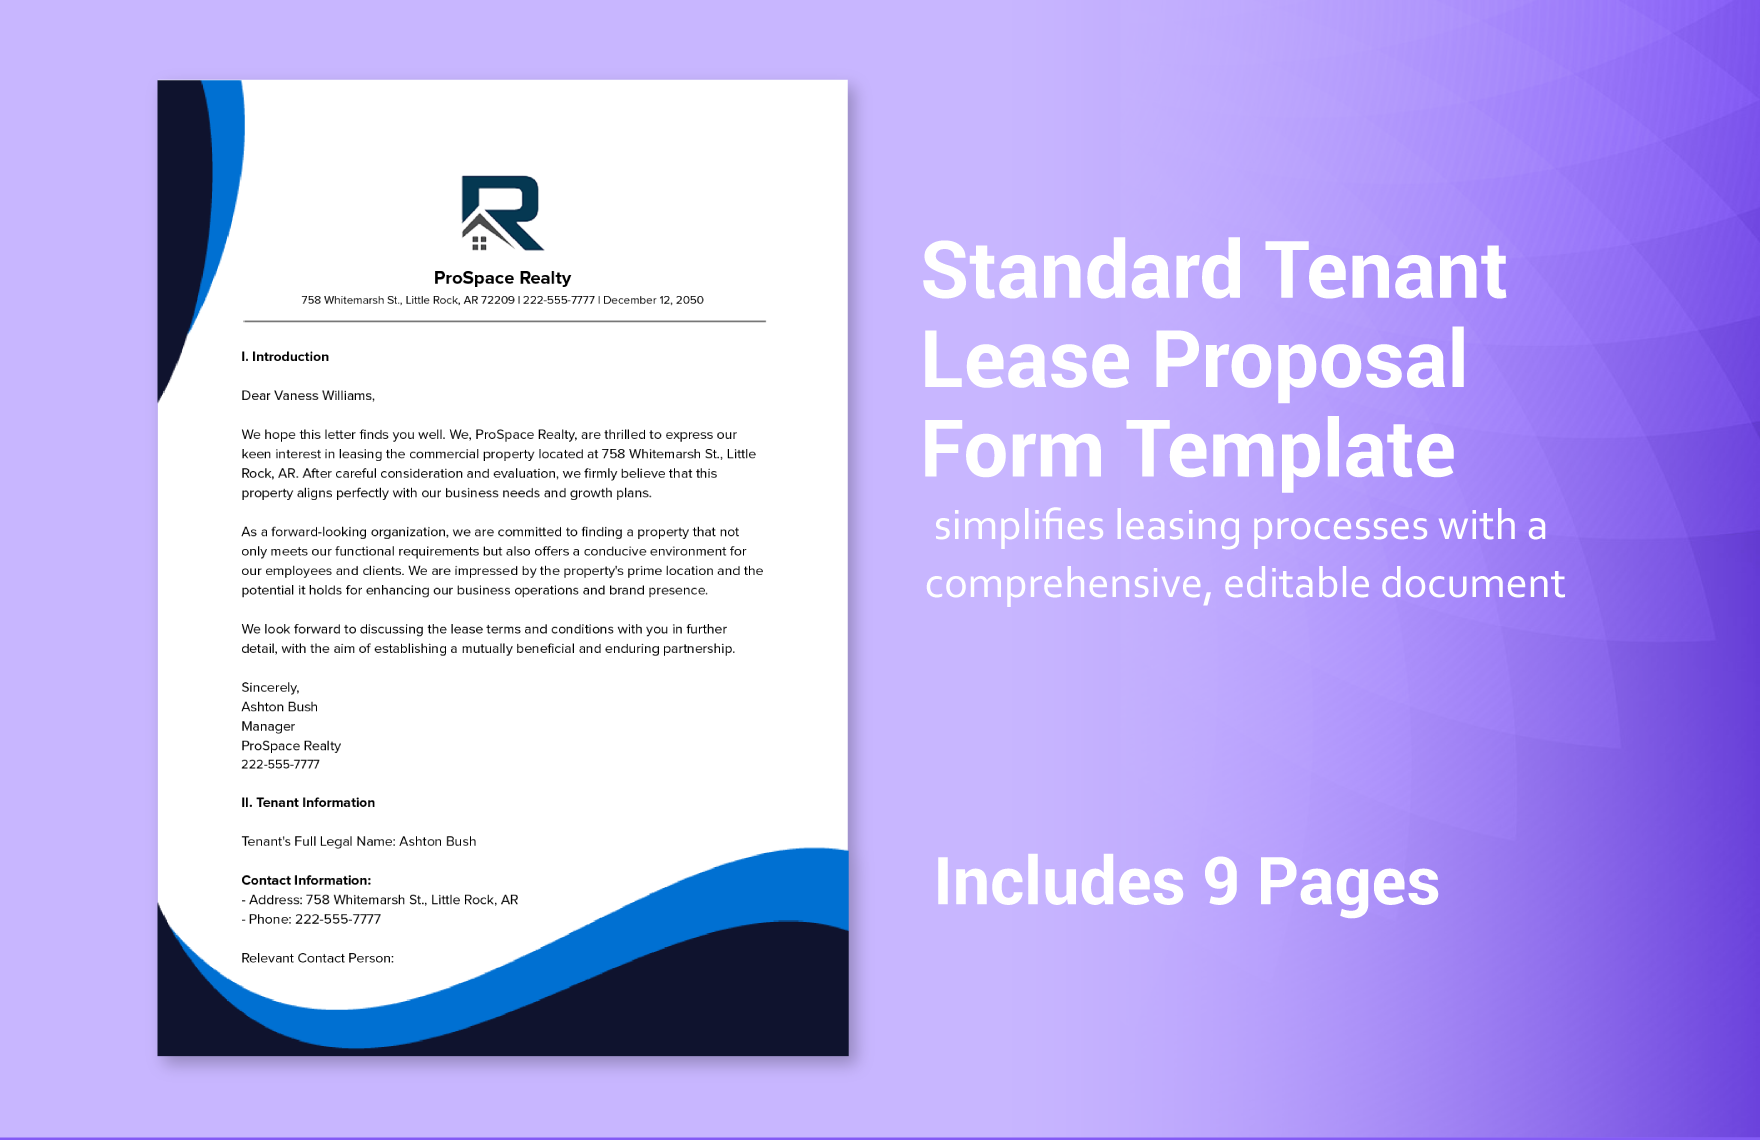 standard-tenant-lease-proposal-form